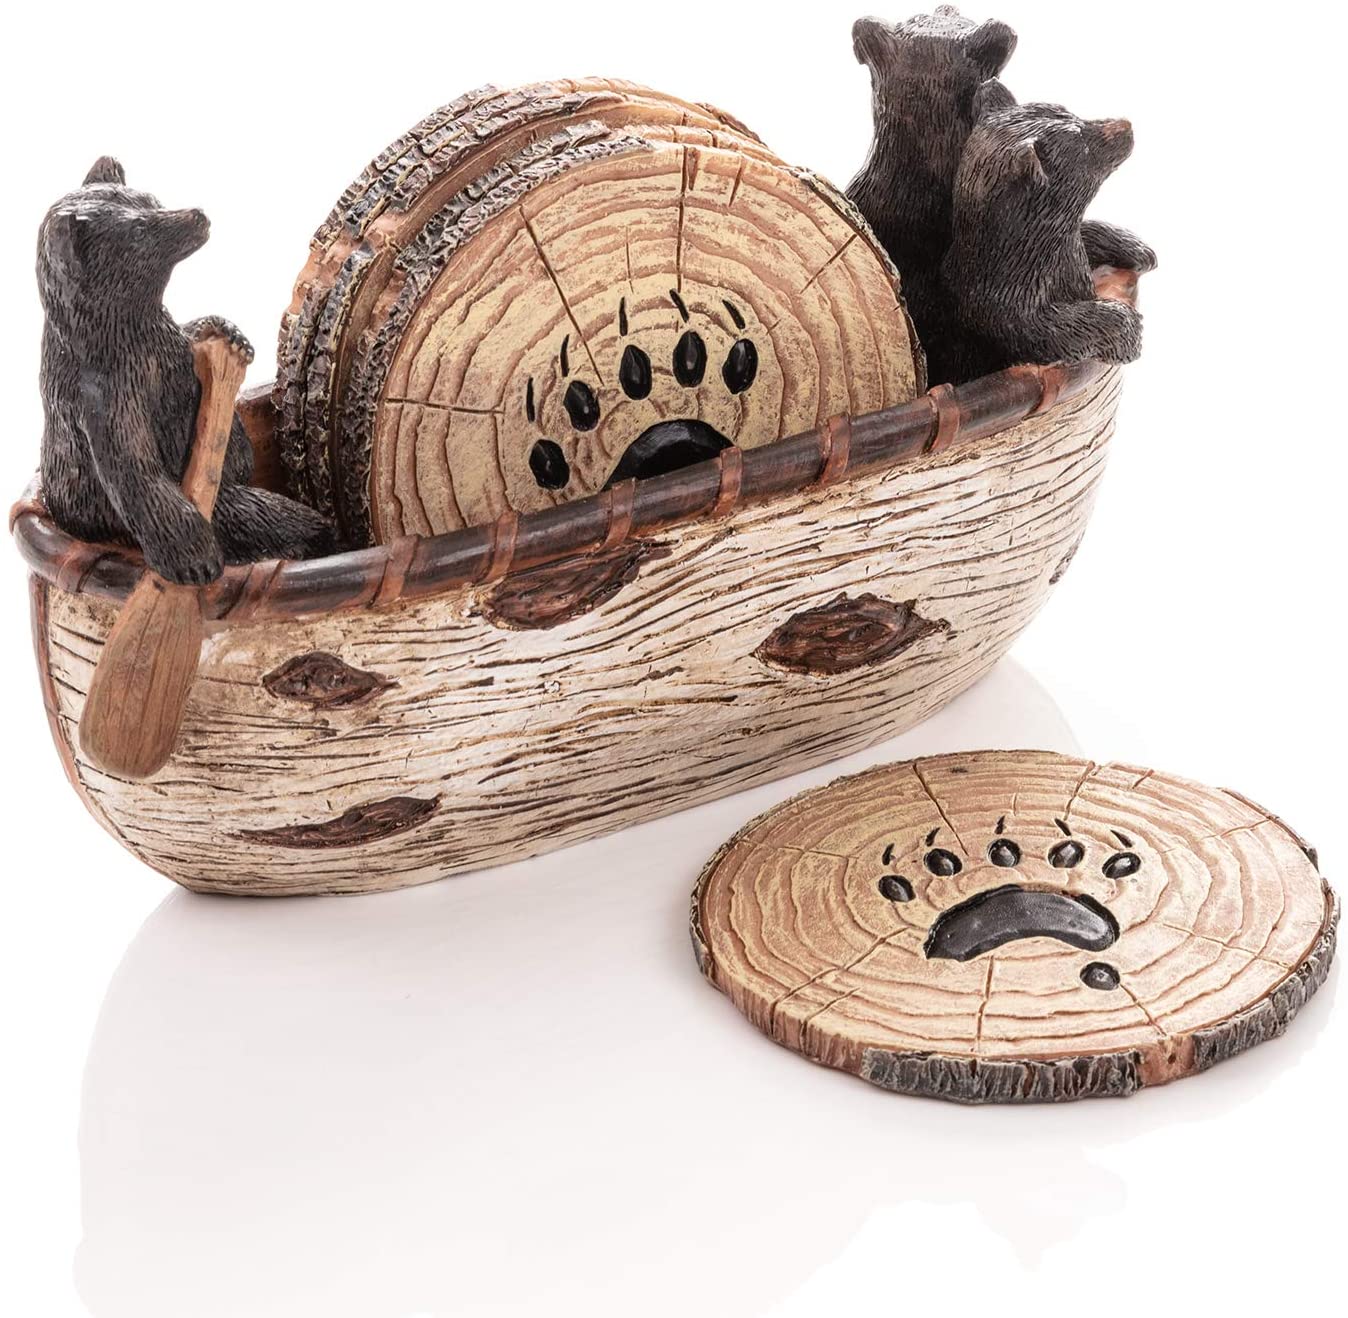 Coasters Set – 6 Full Size Rustic Coasters in Handmade Canoe with Adorable Black Bear Figurines | Log Cabin Decor, Black Bear Decor